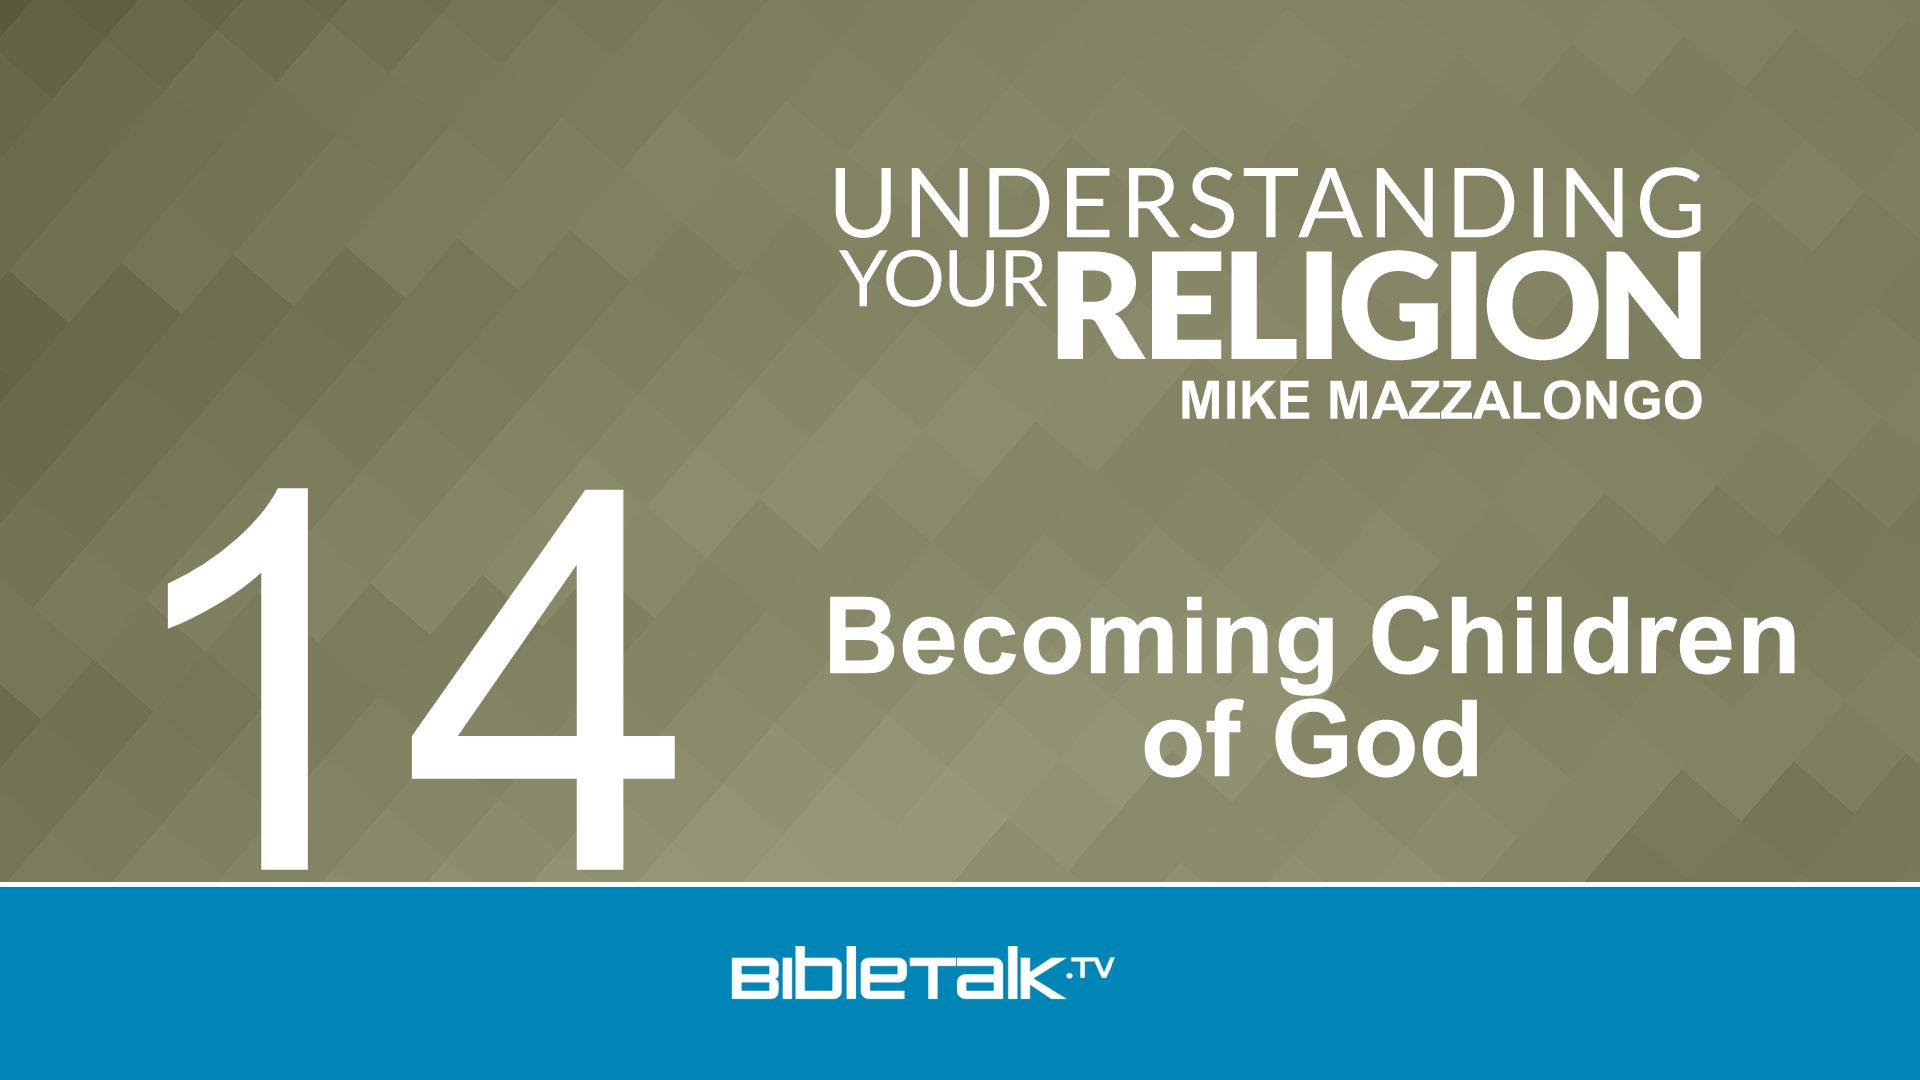 MIKE MAZZALONGO Becoming Children of God 14